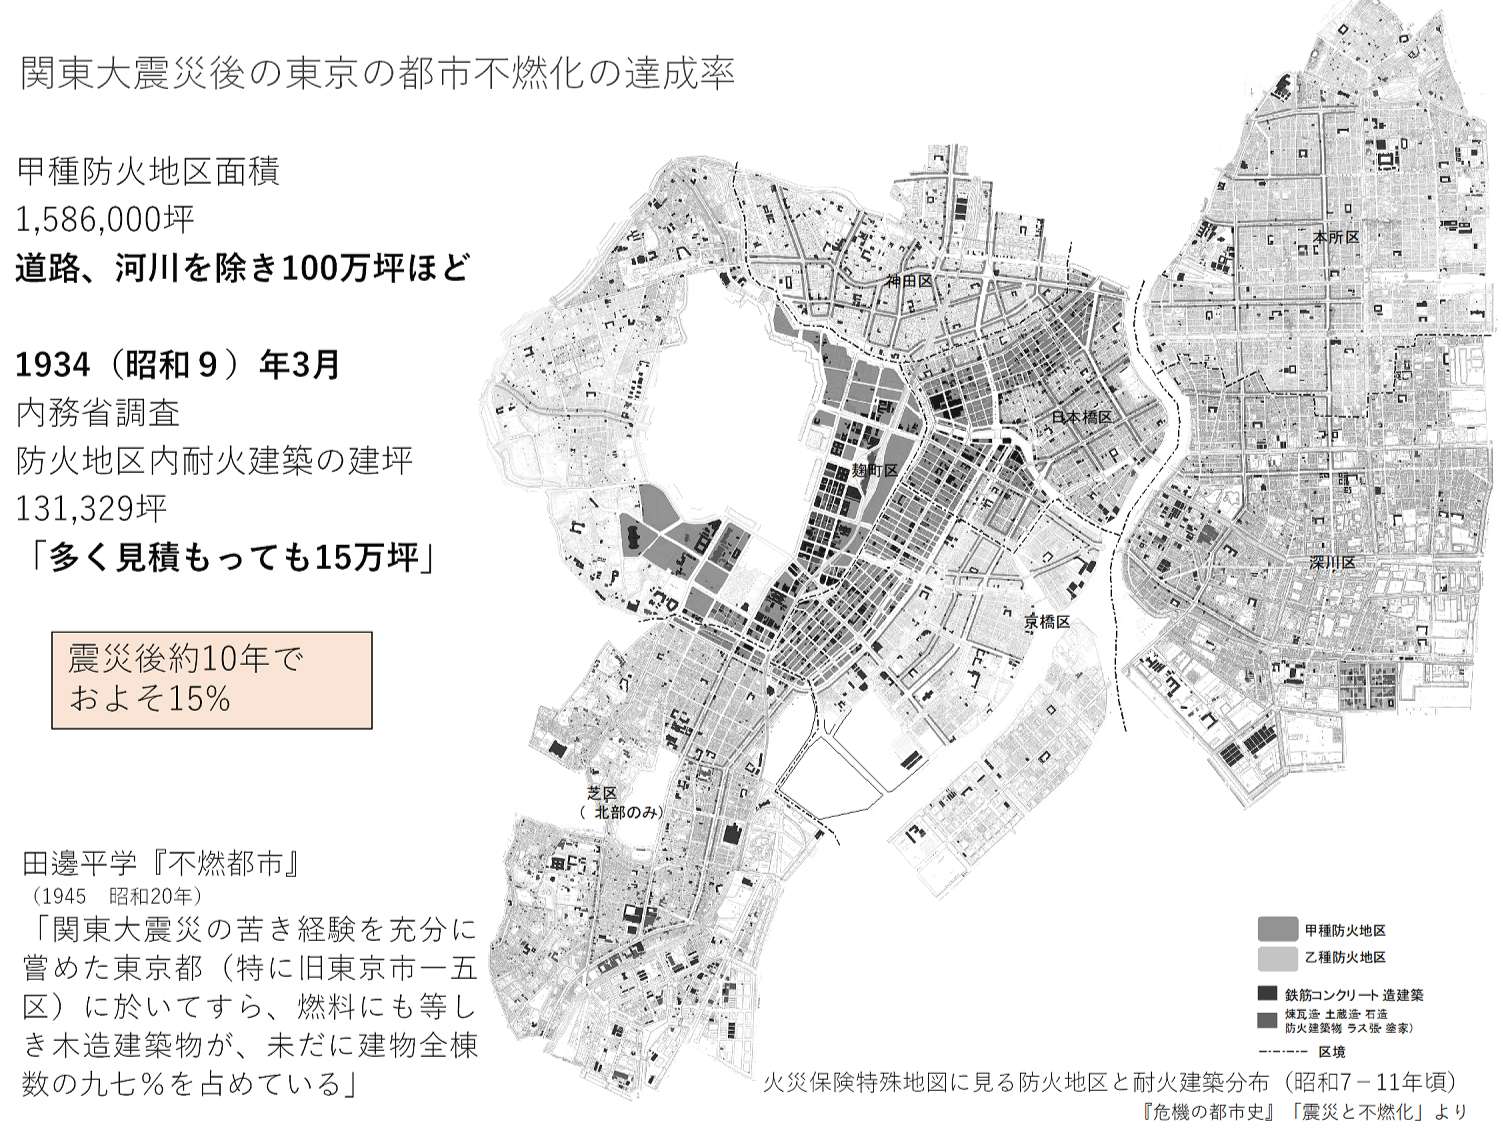 関東大震災後の東京の都市不燃化の達成率